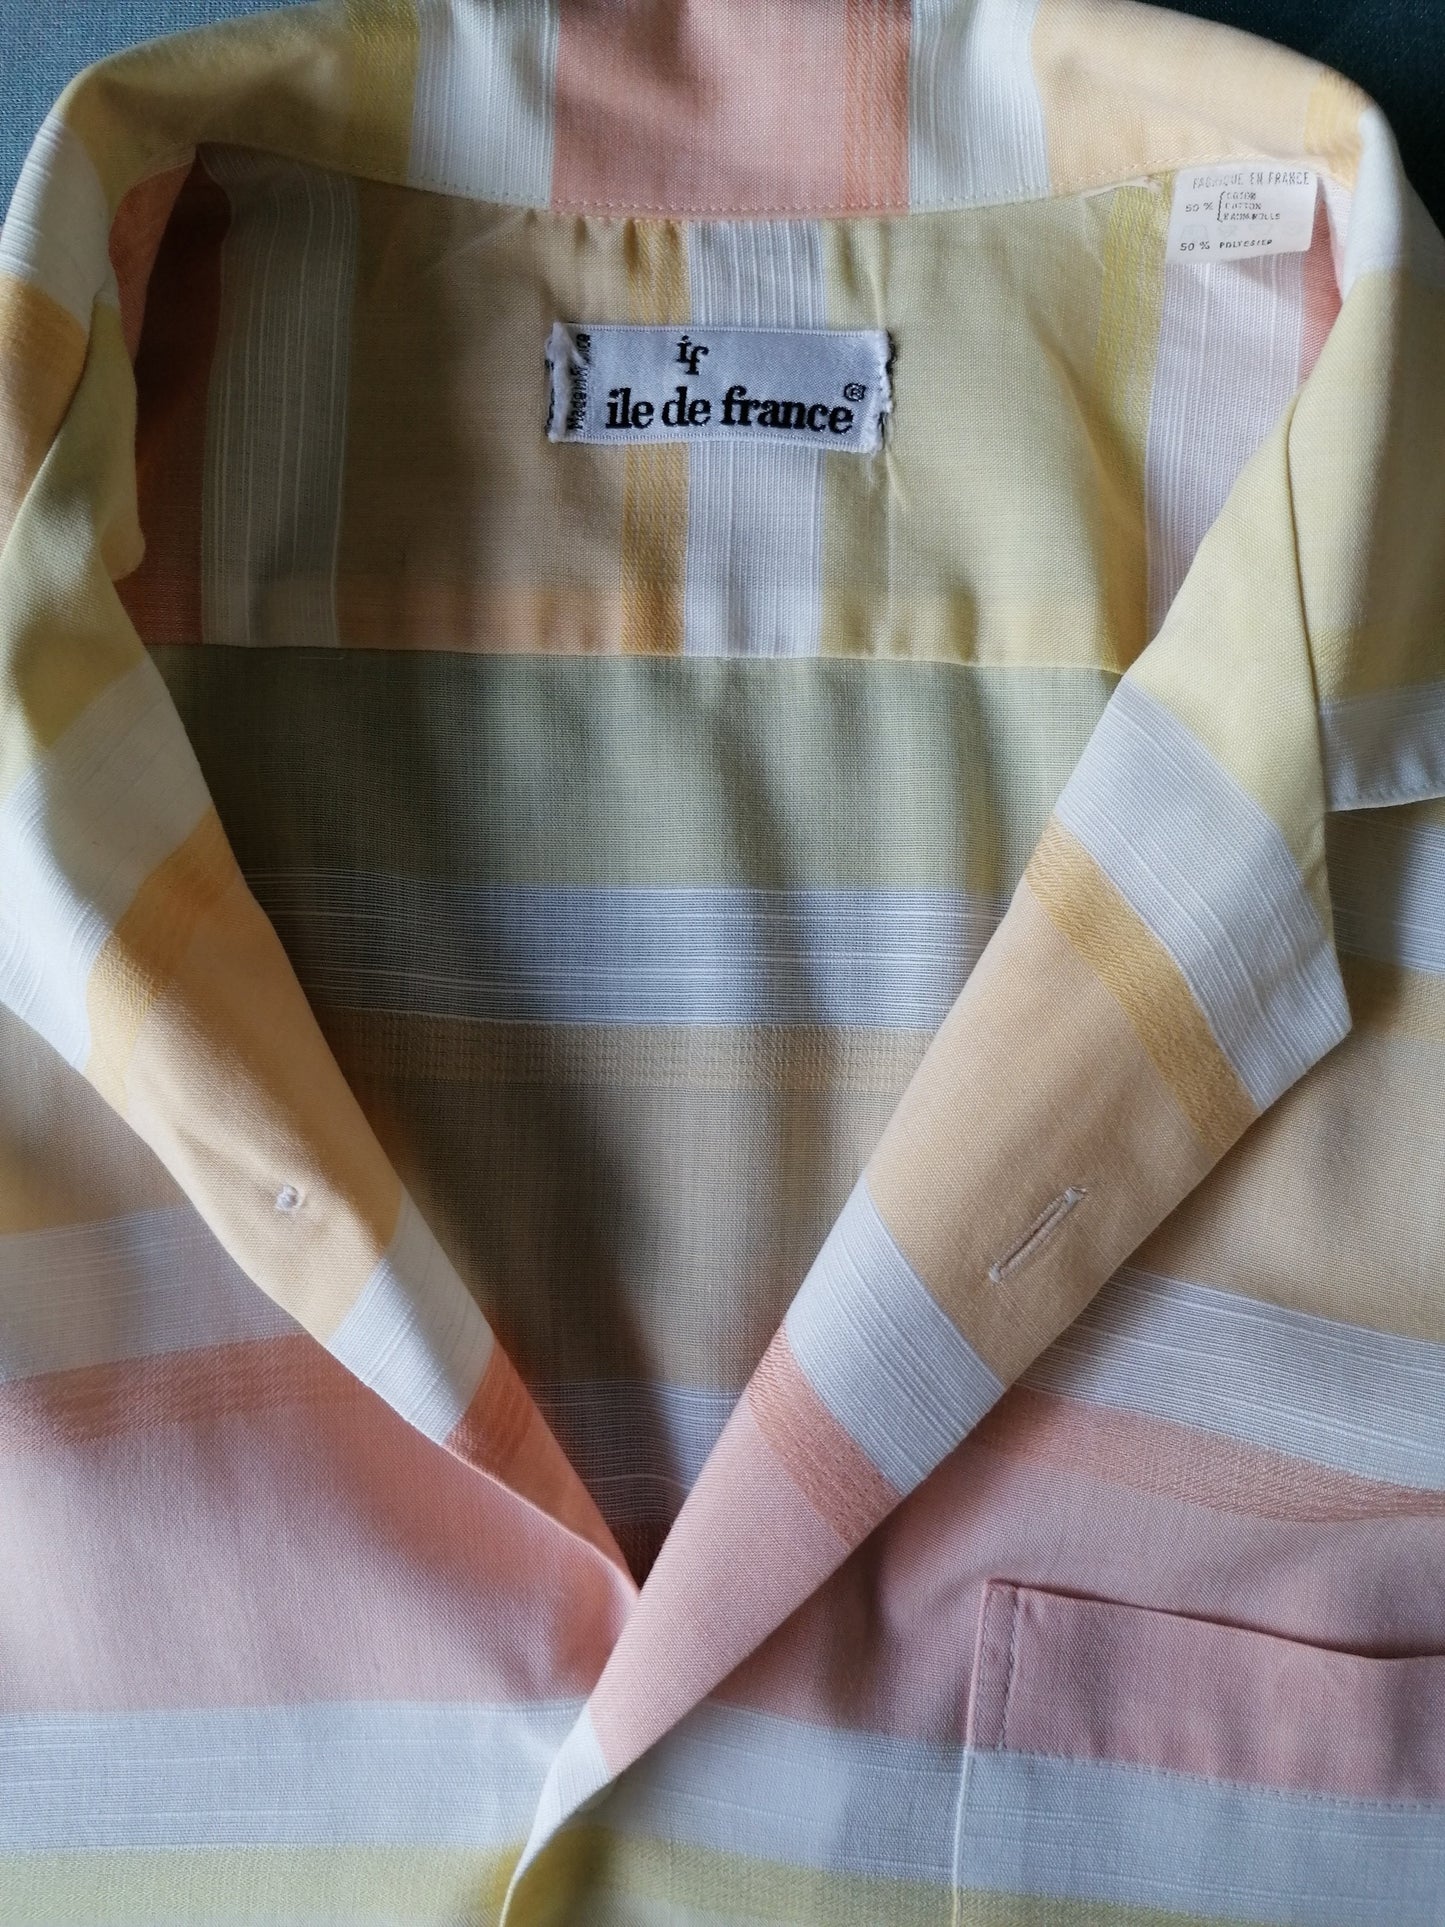 Vintage Short Sleeve Shirt. Yellow orange striped. Size L.